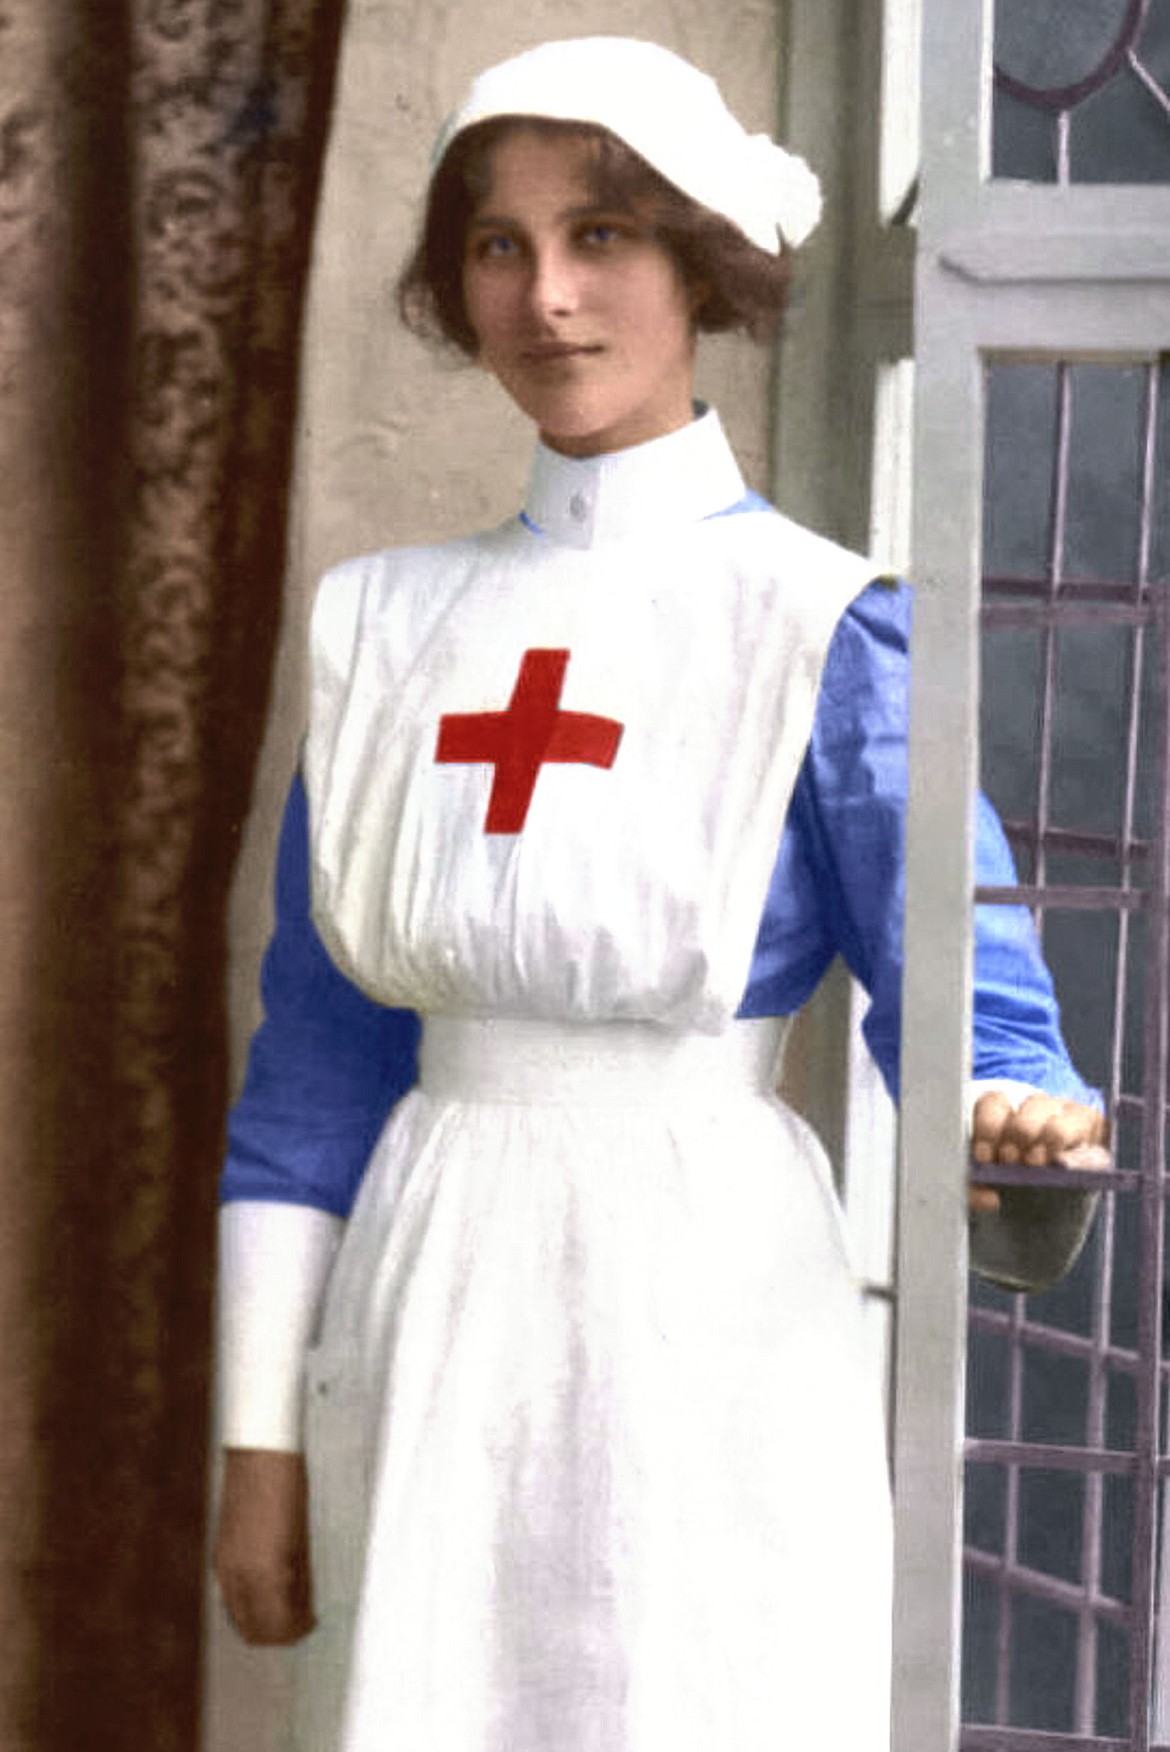 World War I nurse uniform (photo colorized).